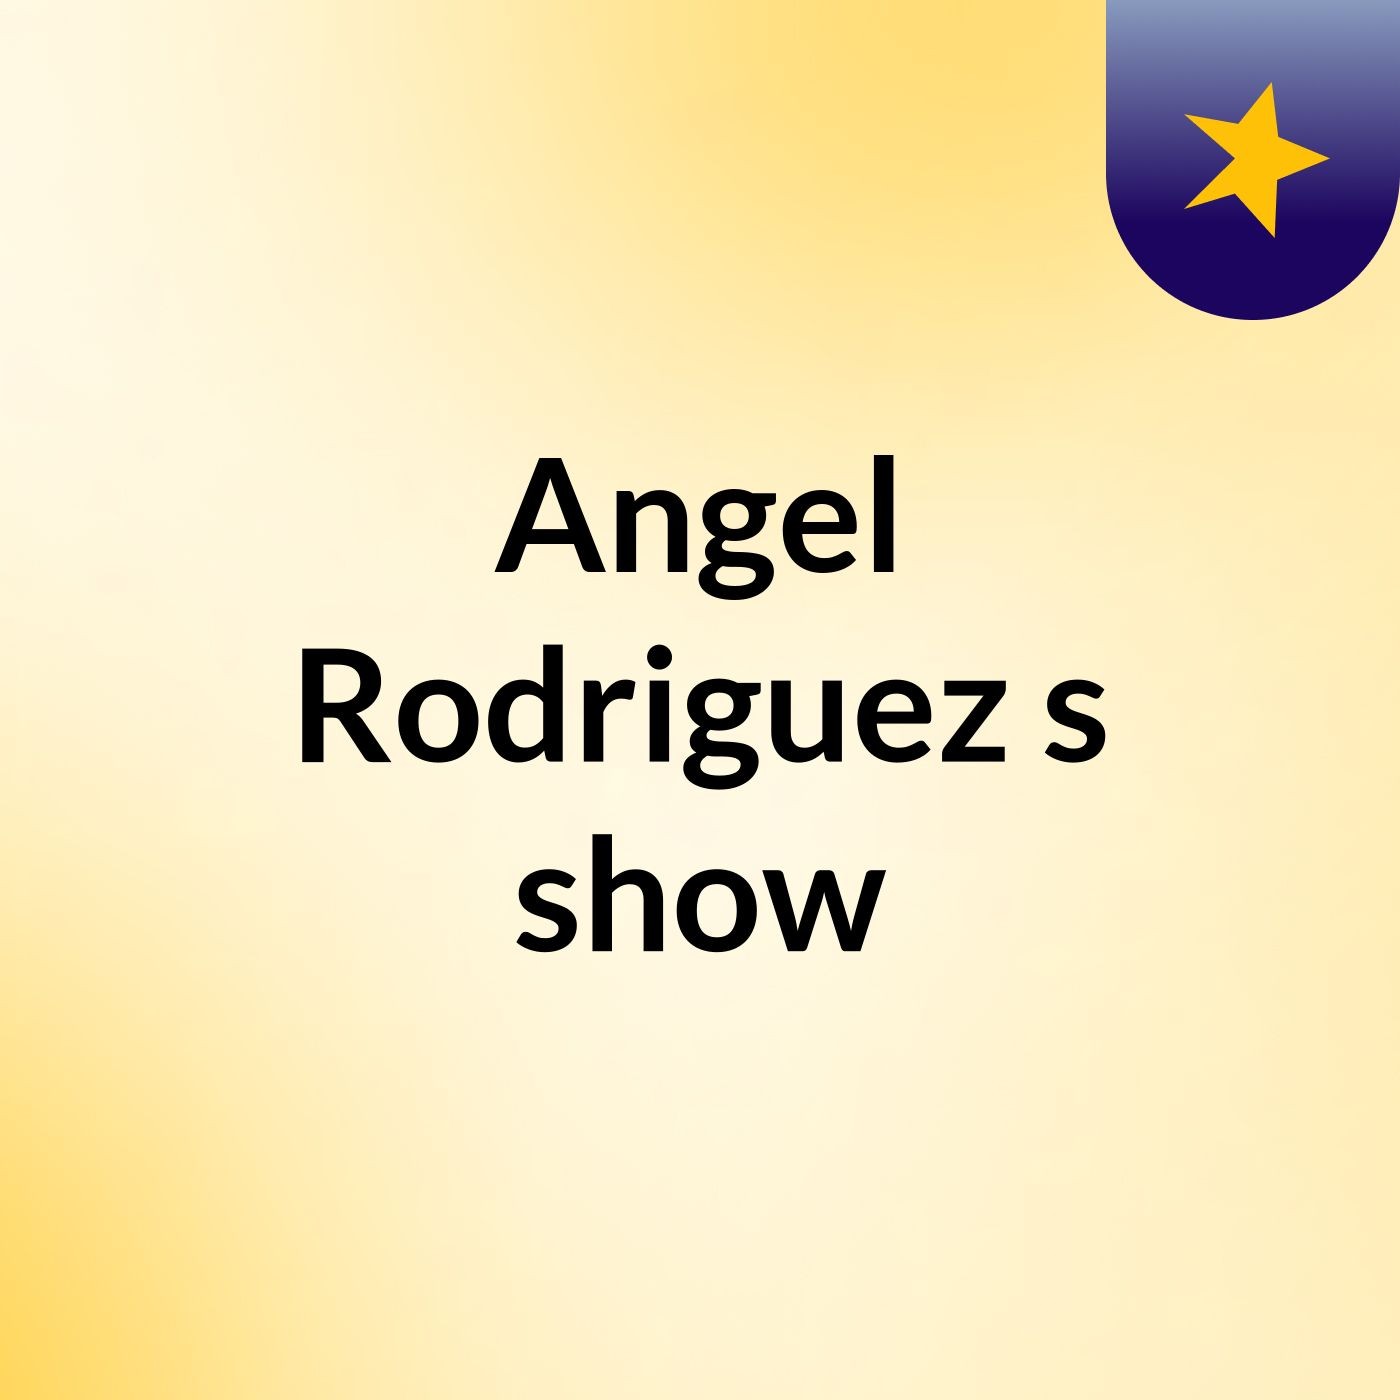 Angel Rodriguez's show